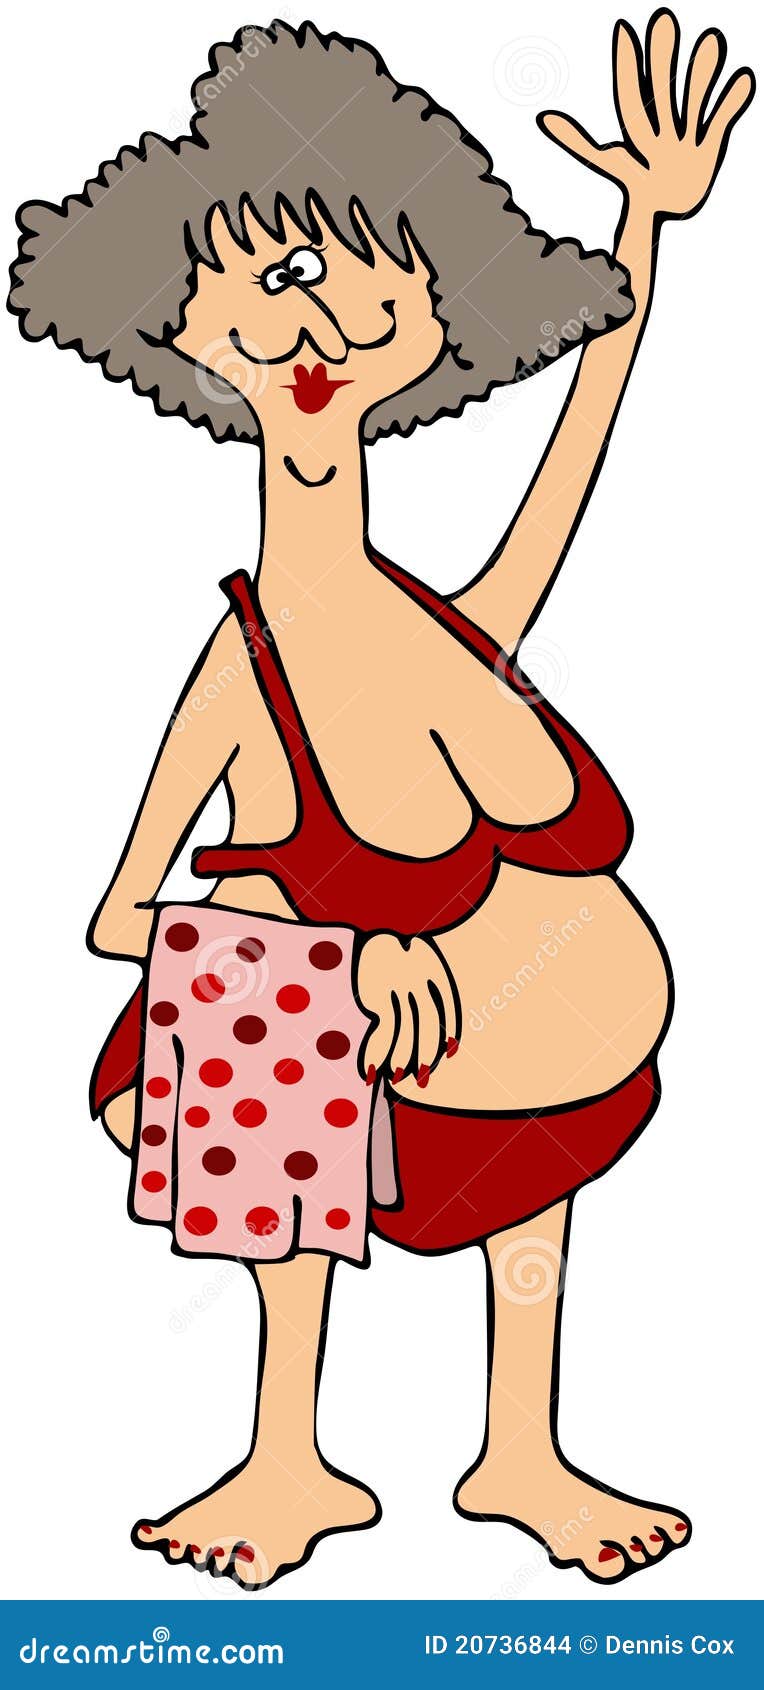 avishay drori recommends big lady in bikini pic